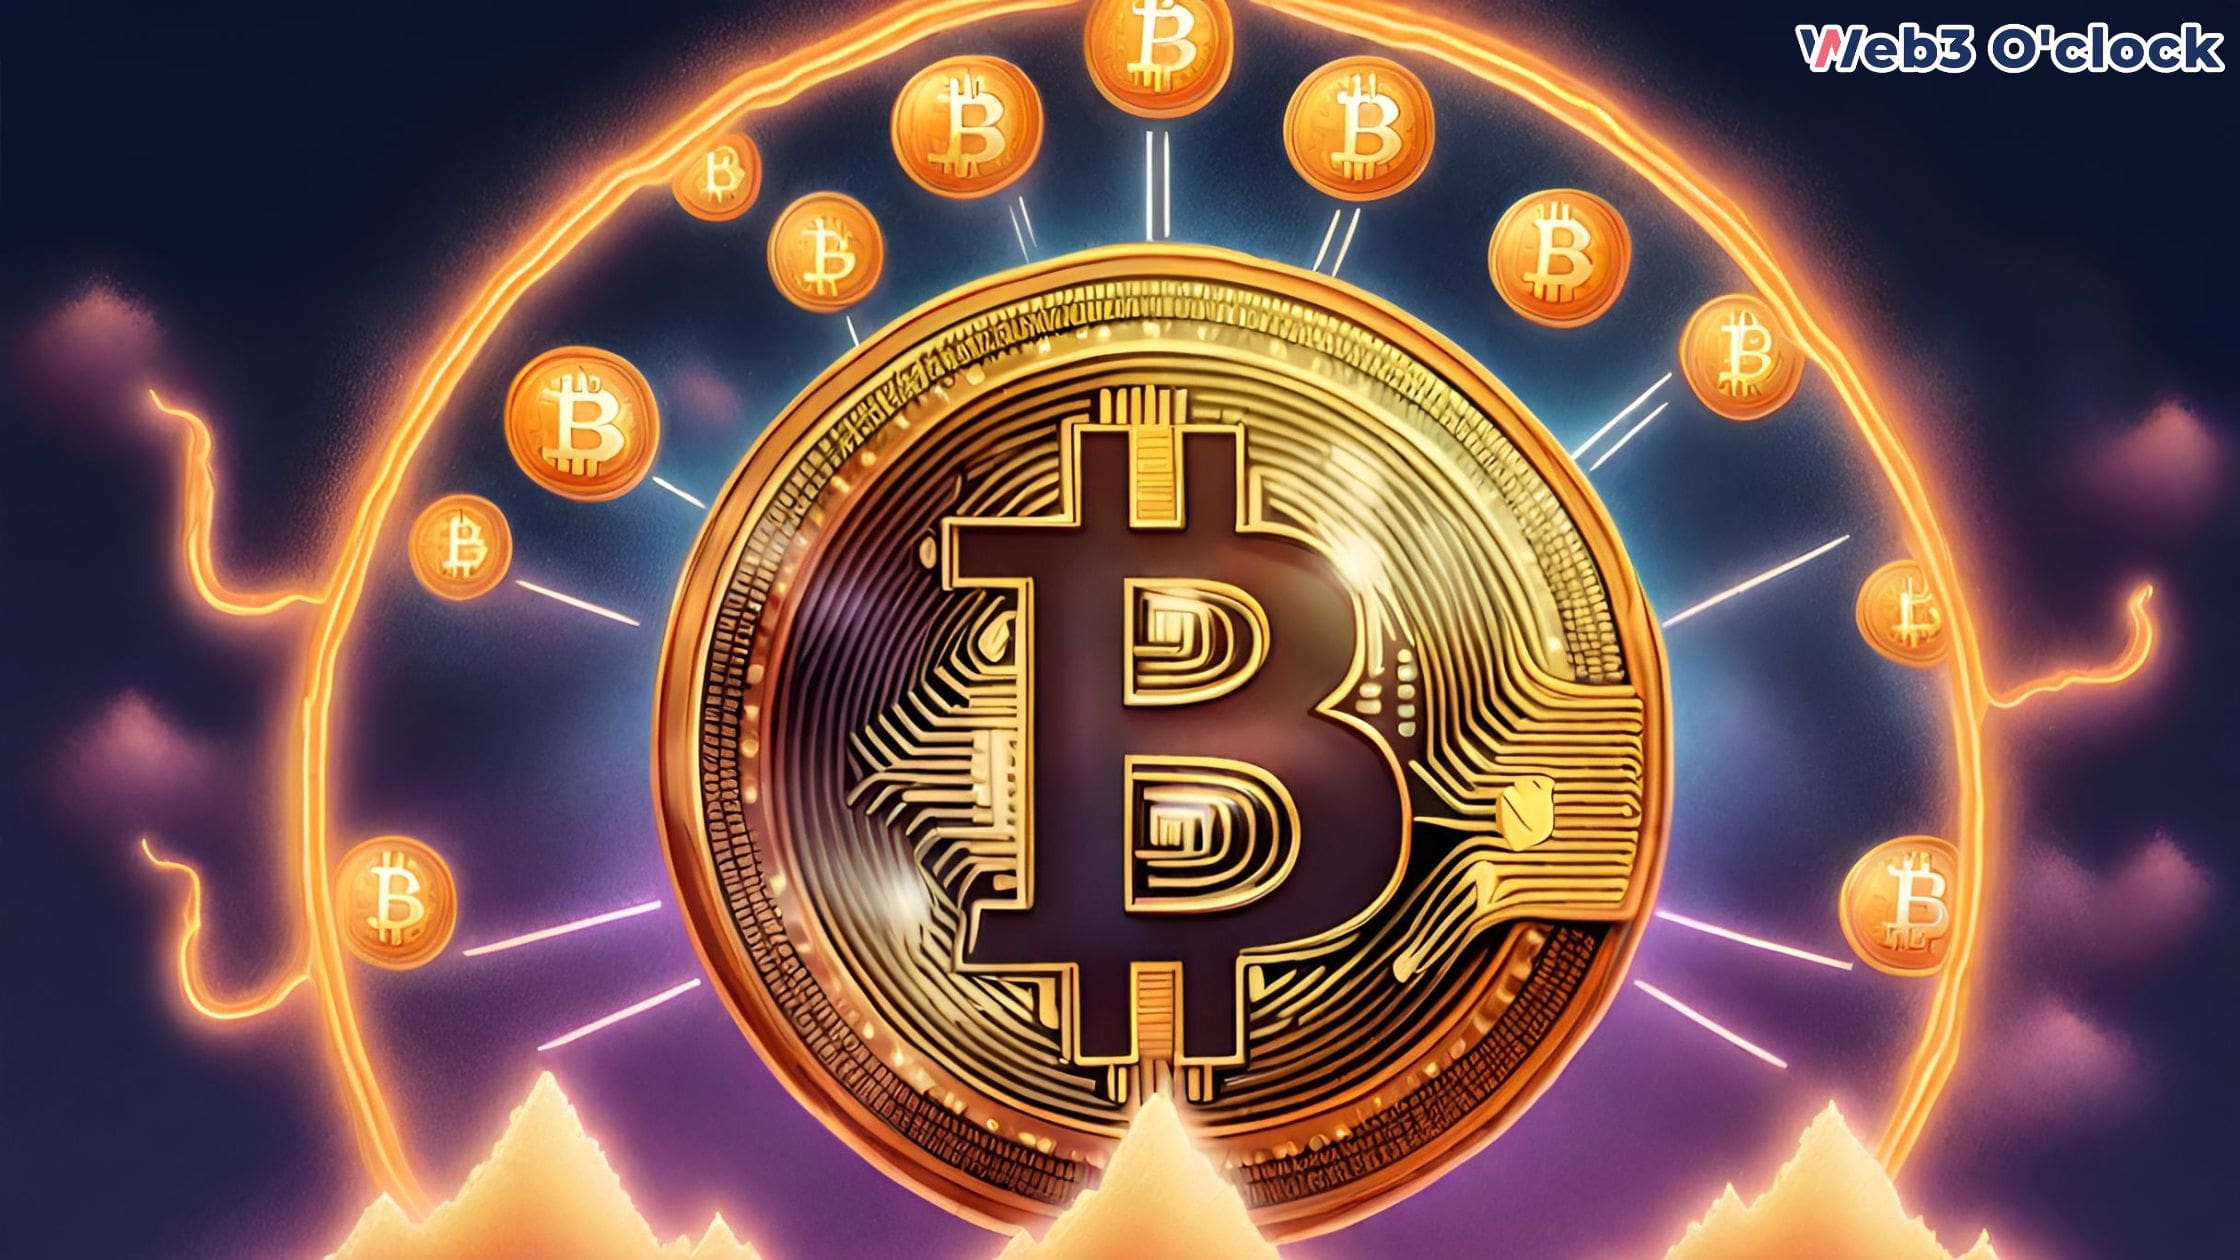 Bitcoin to the moon by web3 o'clock